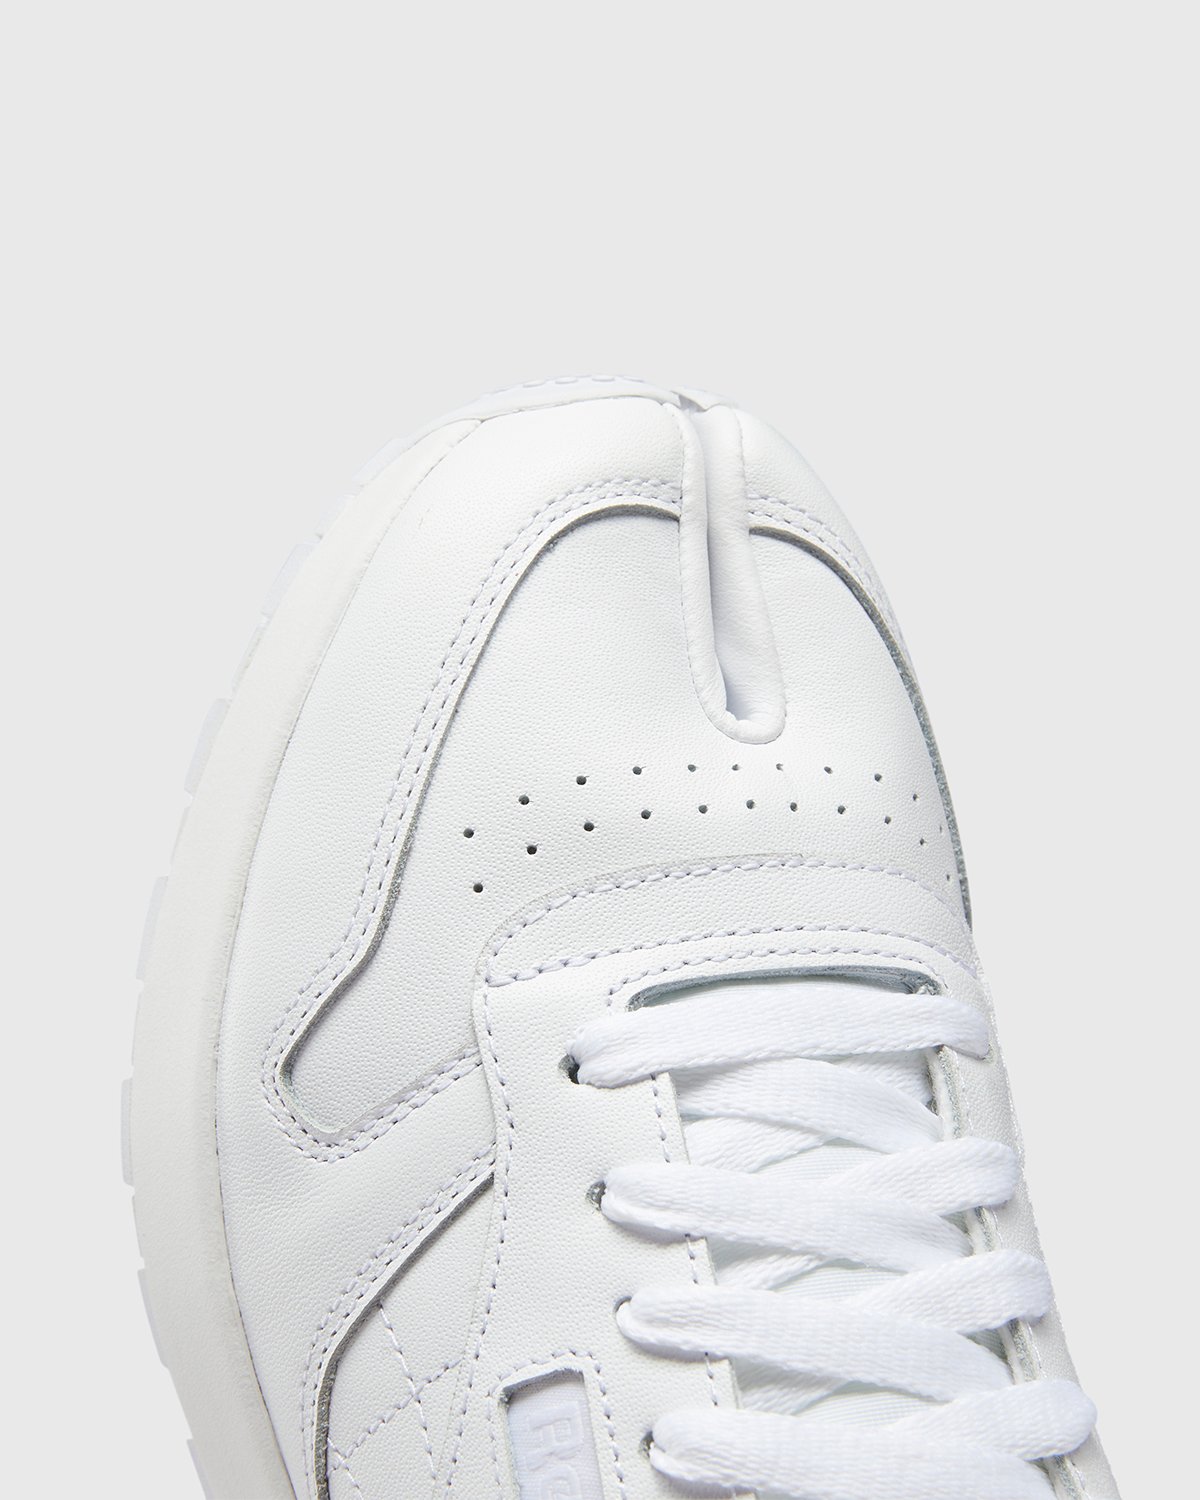 Maison Margiela x Reebok - Classic Leather Tabi White - Footwear - White - Image 4